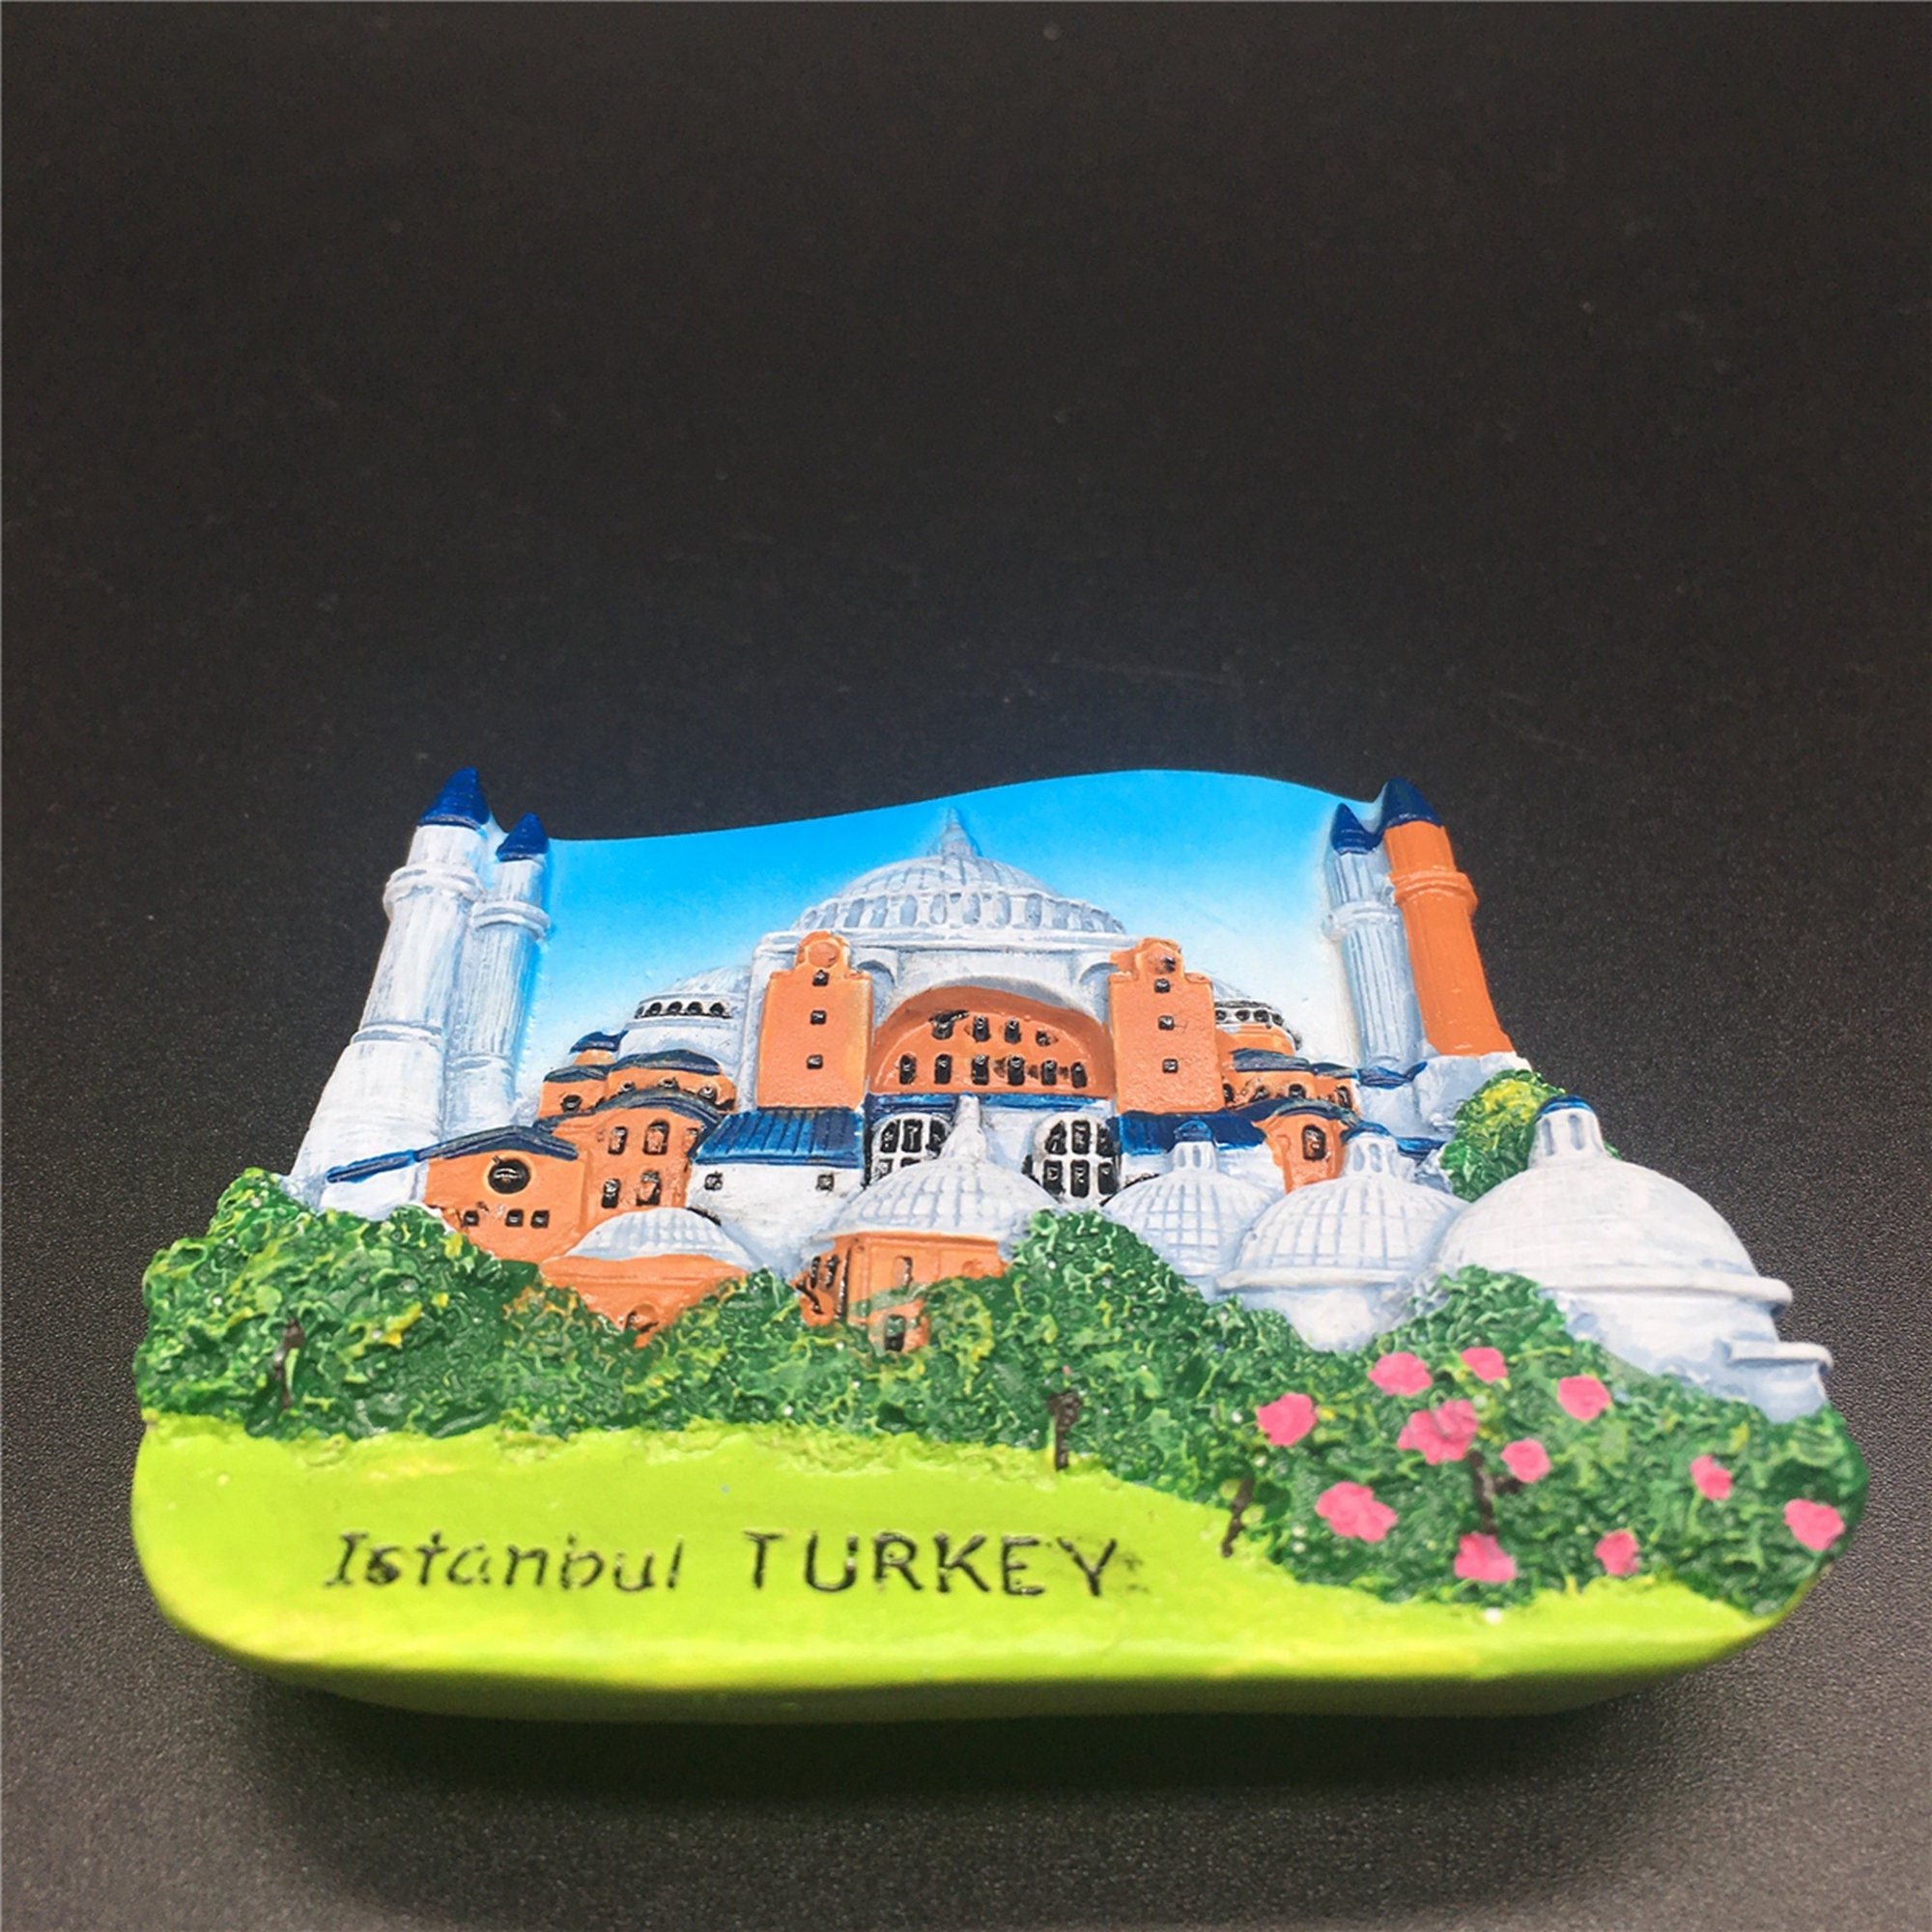 Details about   Istanbul Turkey Fridge Magnet Travel Souvenir 3"x2" Bosporus 